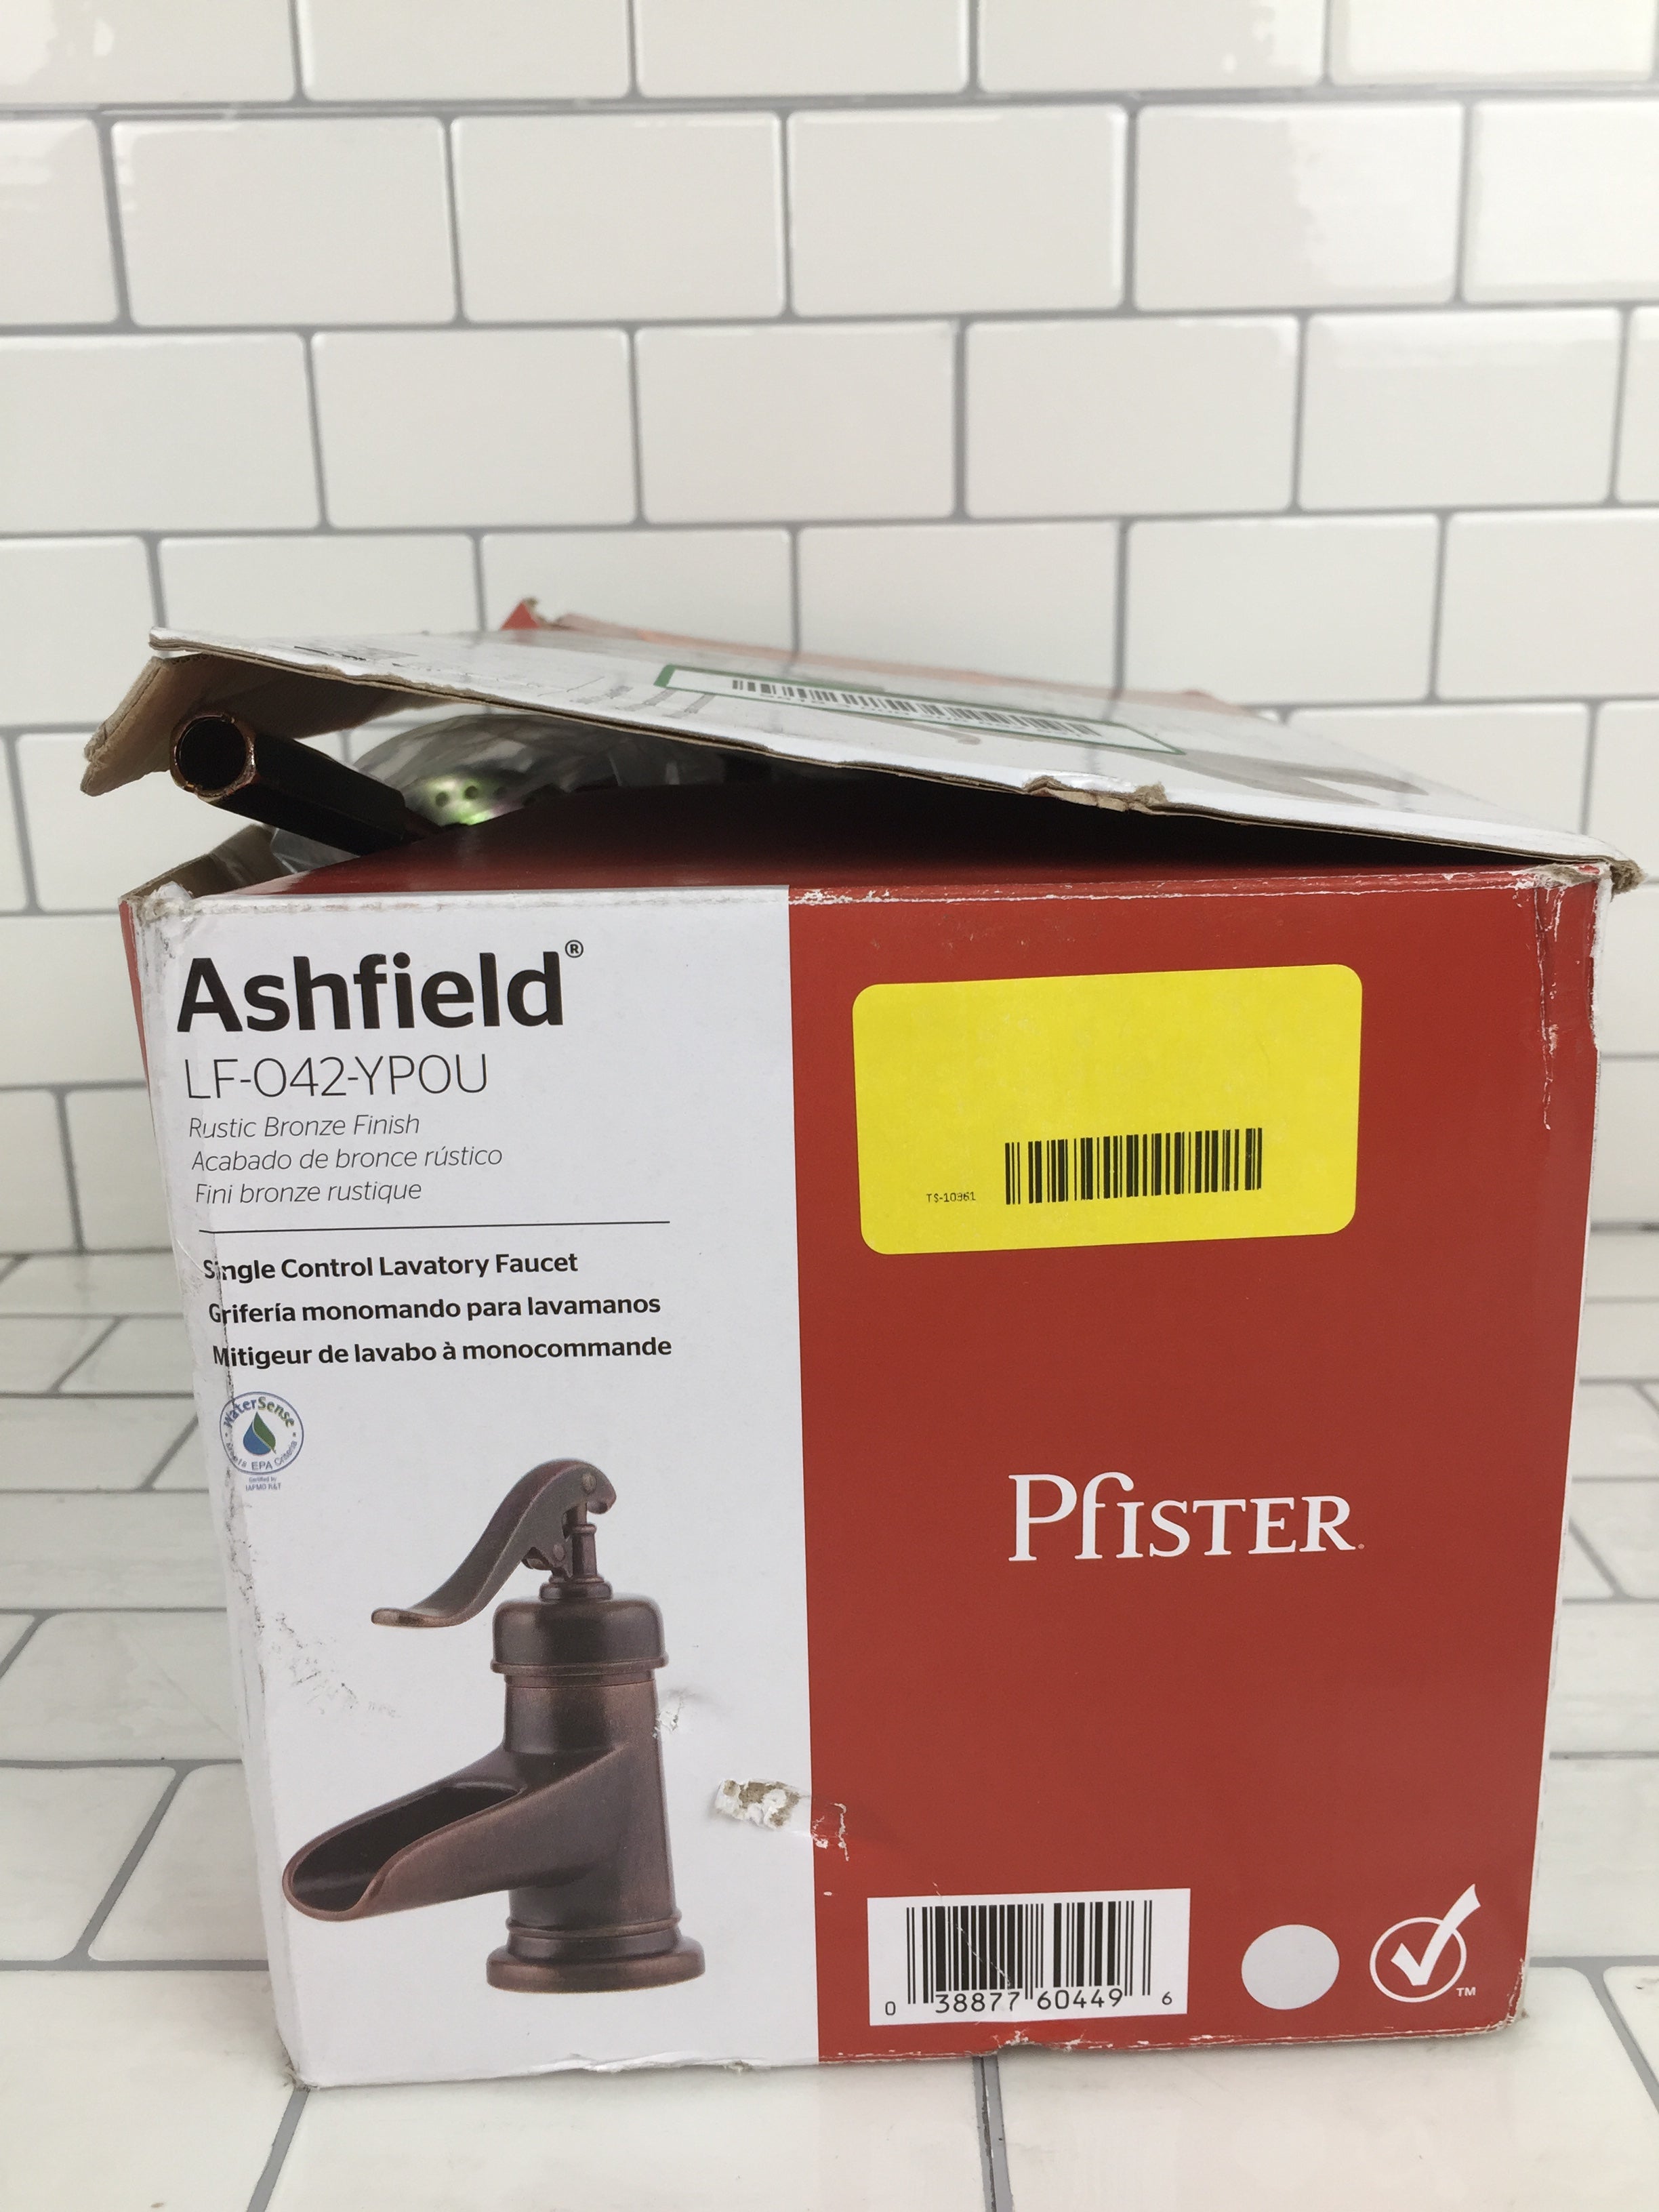 Pfister LF042YP0U Ashfield Single Control 4